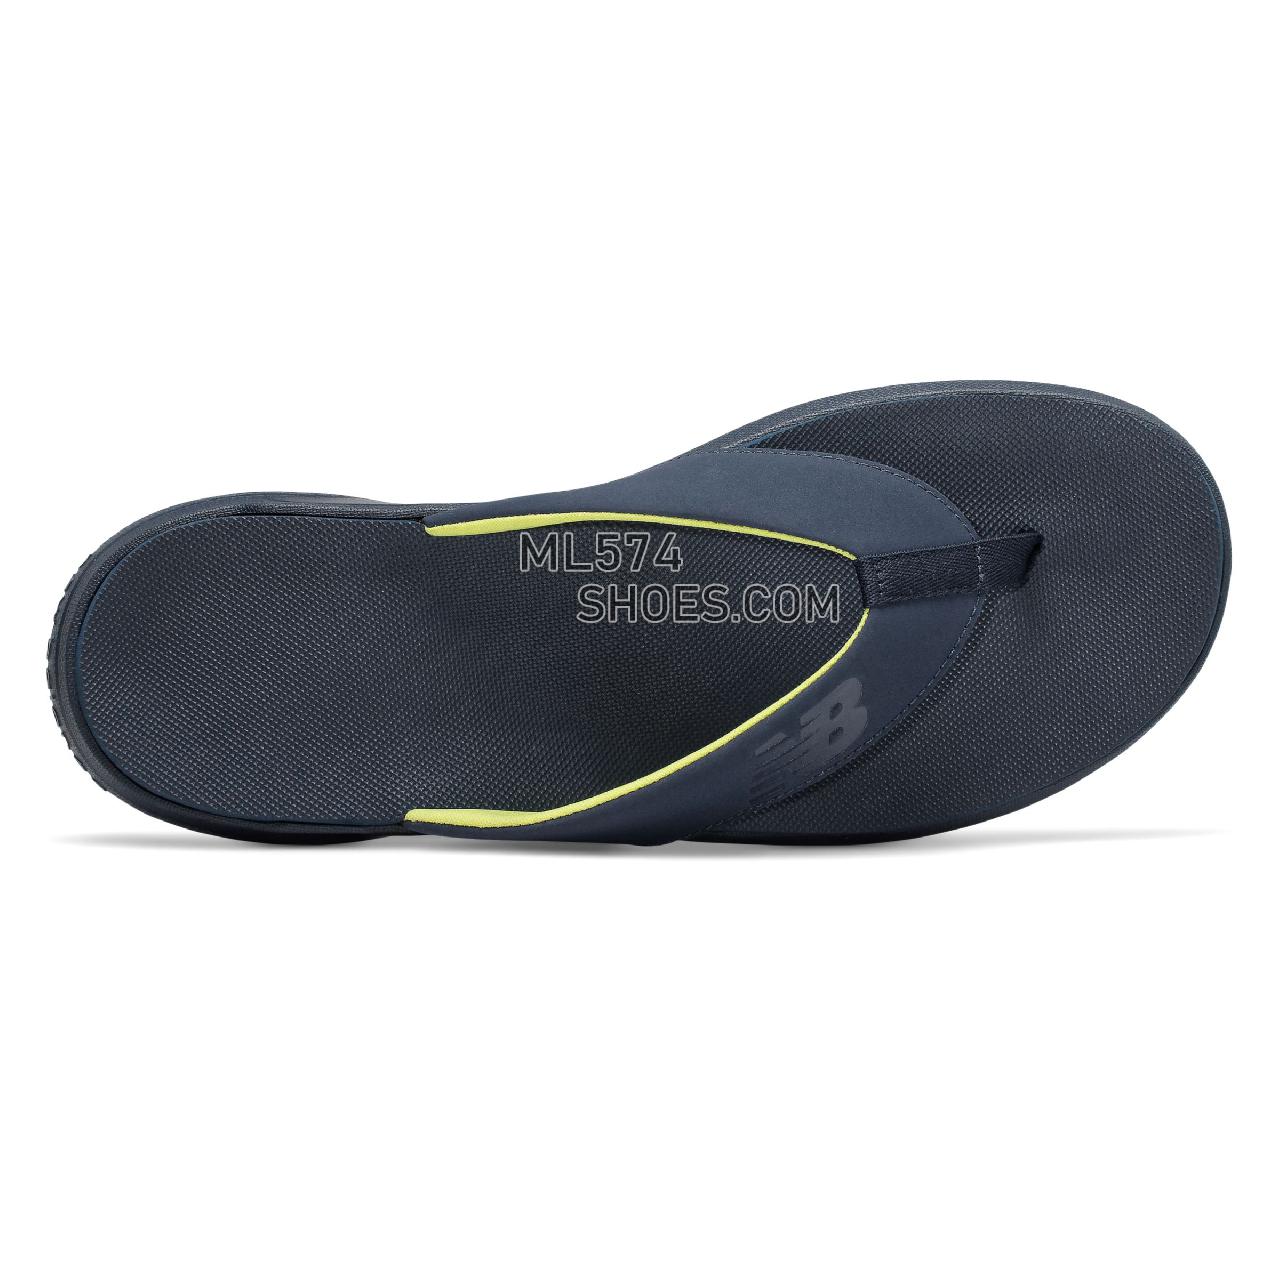 New Balance 340 - Men's Flip Flops - Natural Indigo with Sulphur Yellow - SMT340NI